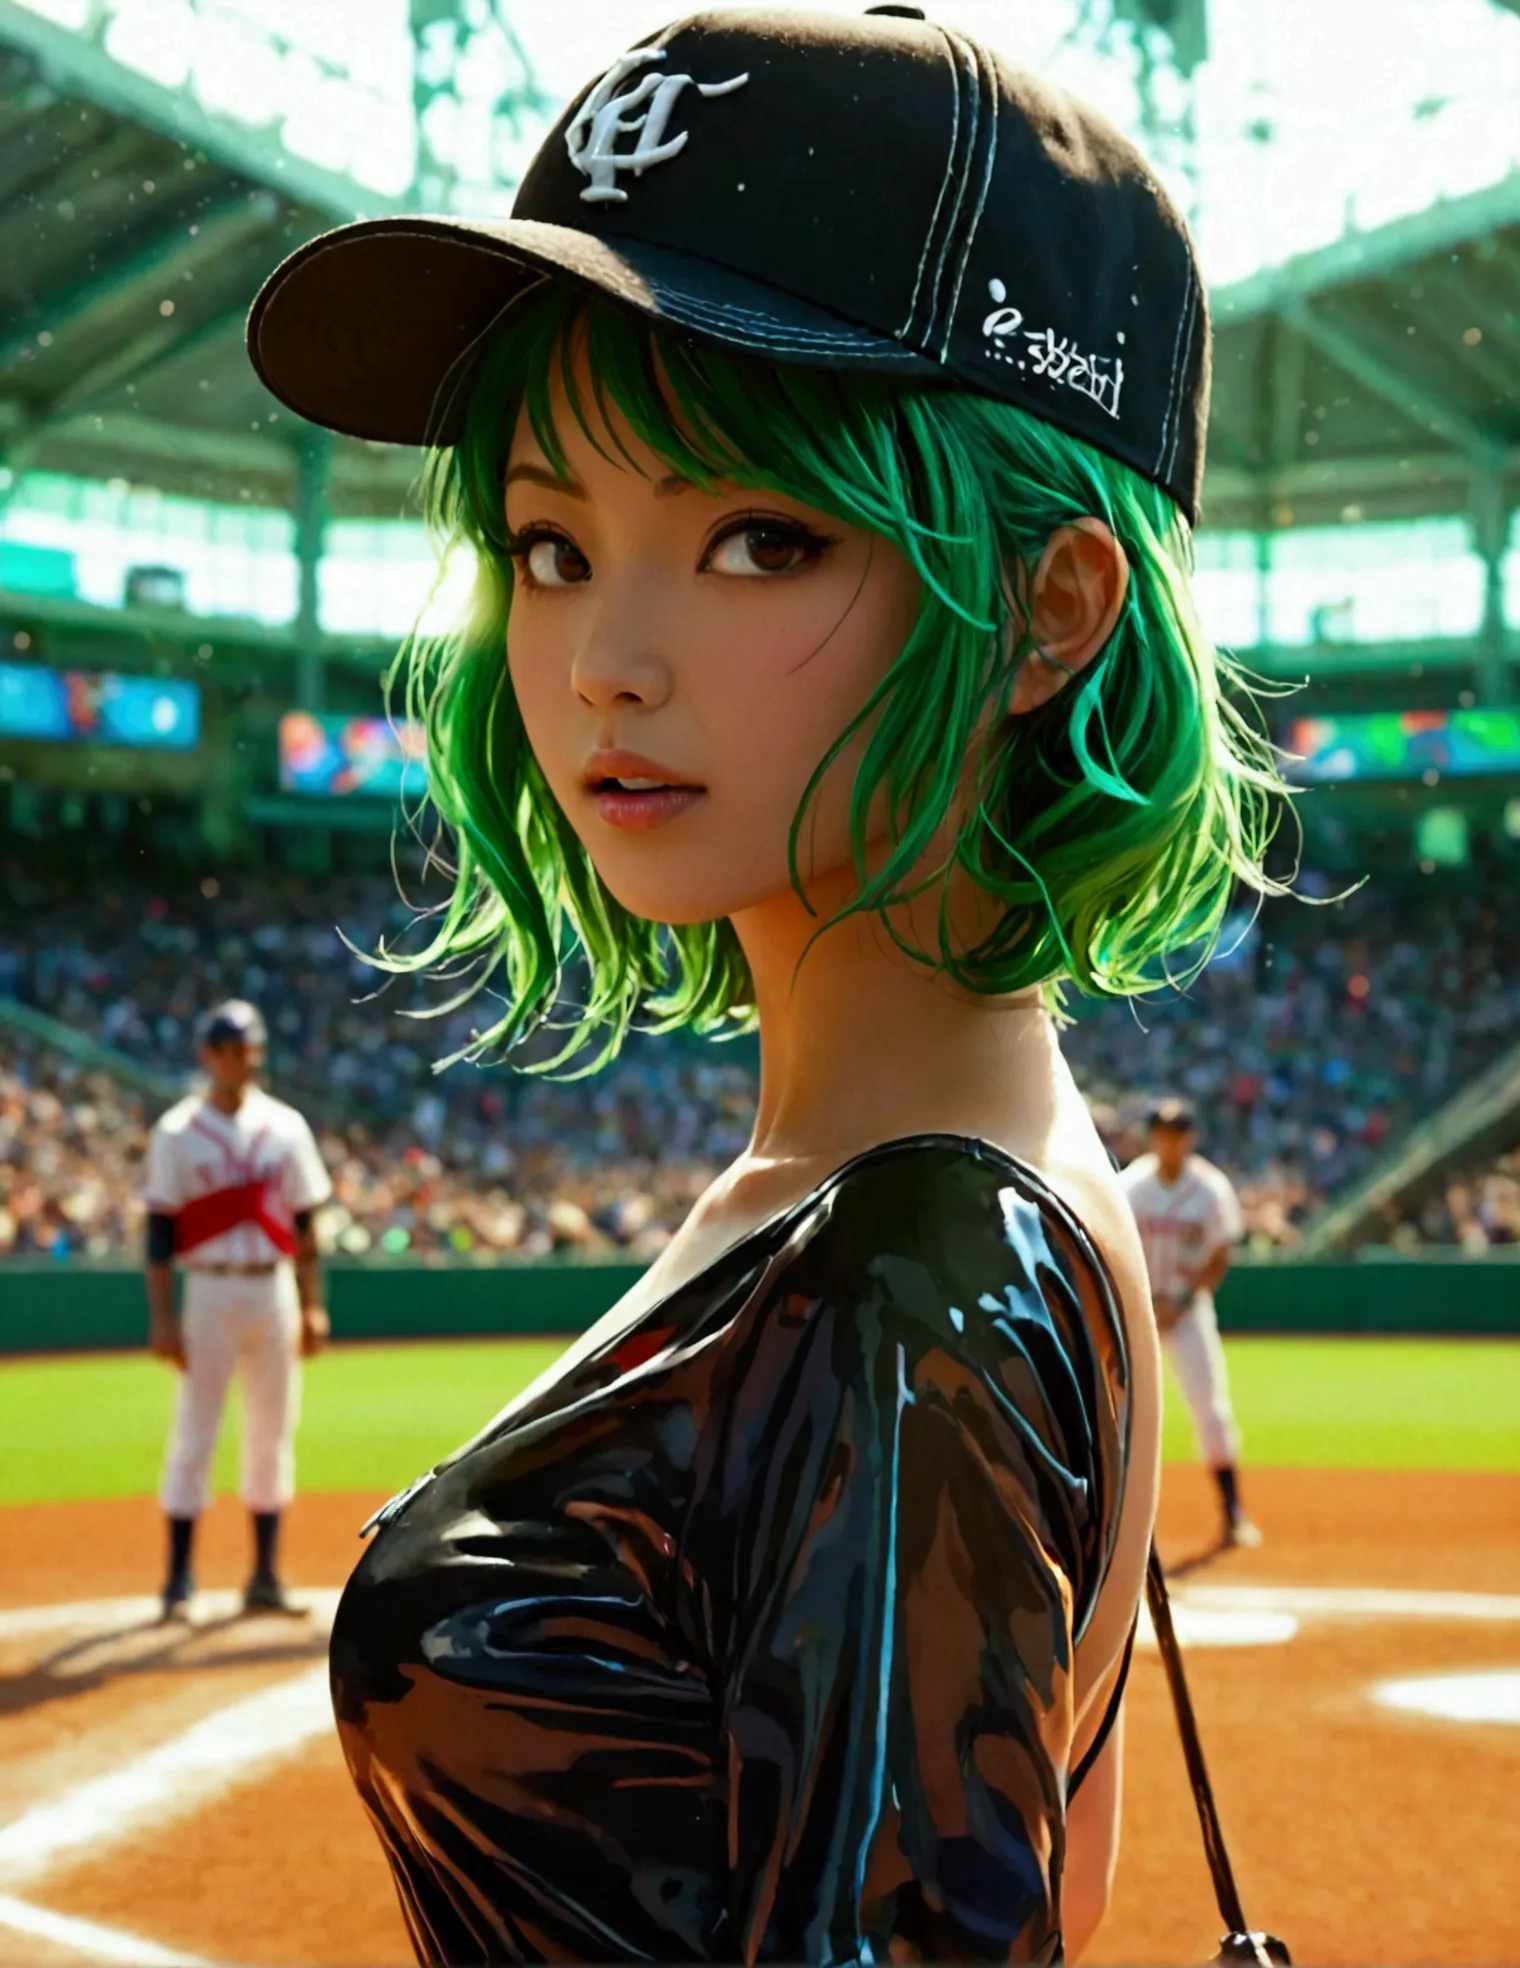 A beautiful Japanese woman (Tatsumaki,black dress, green hair) in a baseball cap pitching a ball, dynamic pitching pose, crowd c...